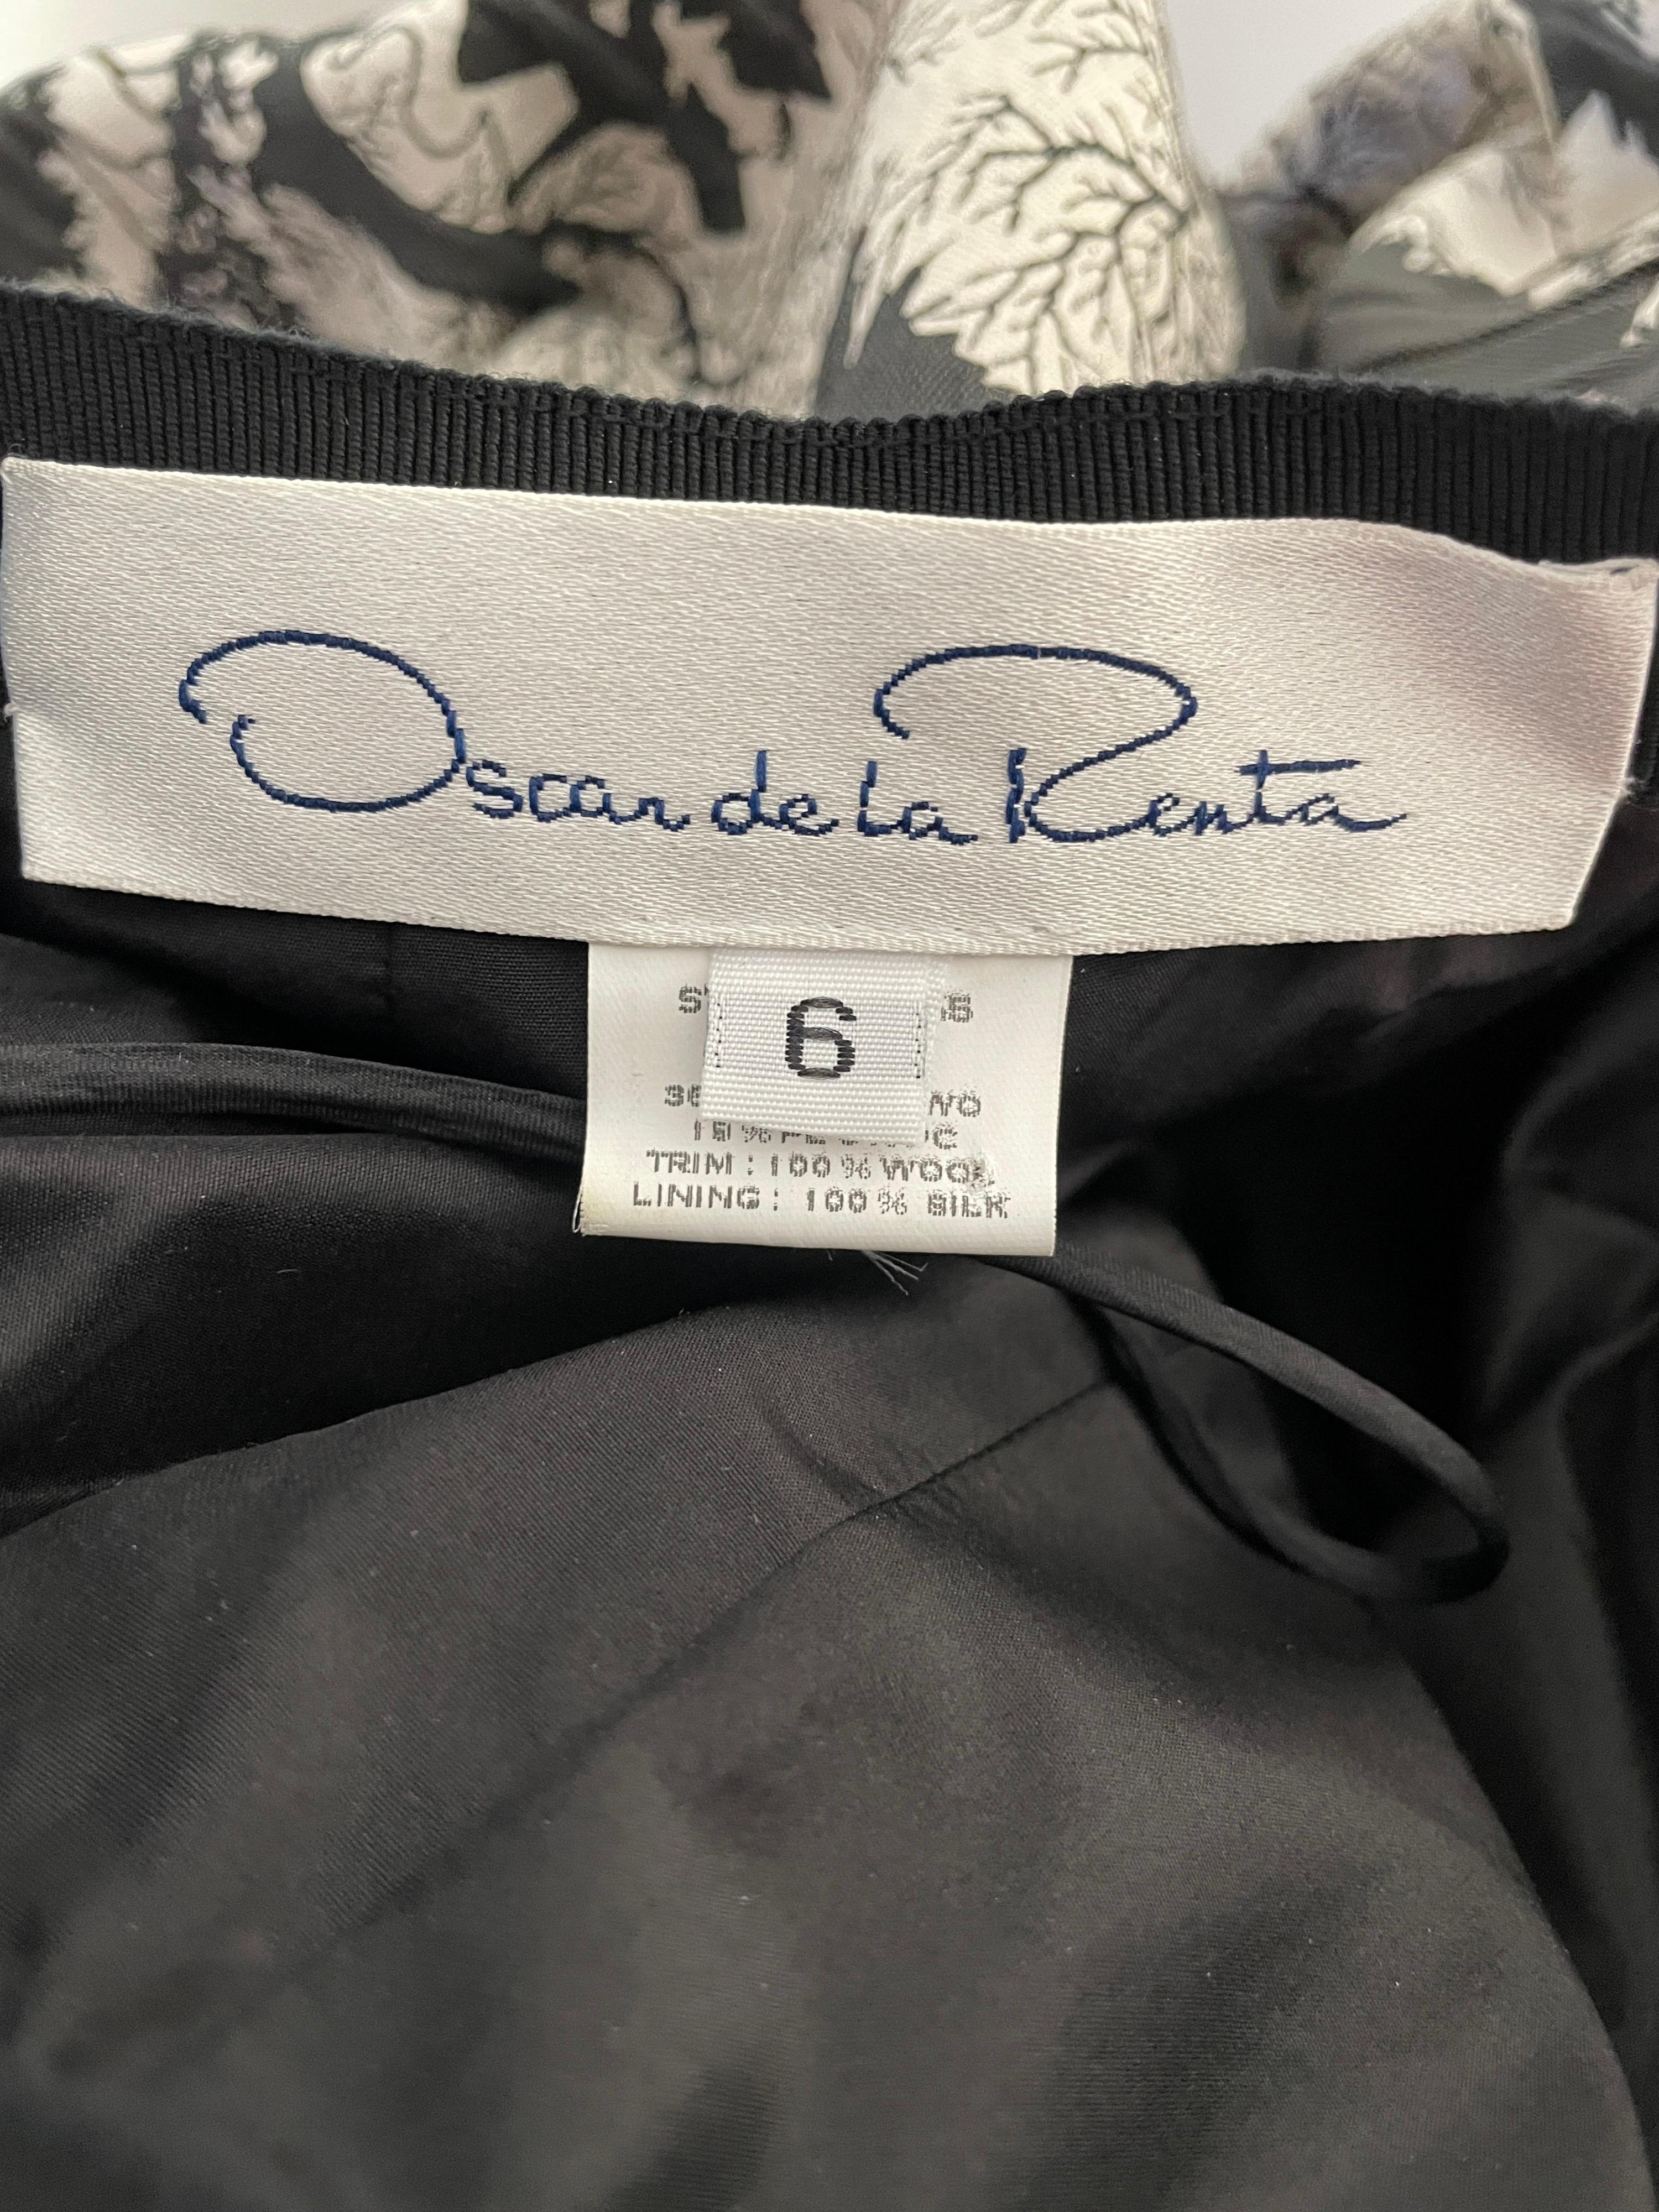 Oscar de la Renta Charming Black and White Toile de Jouy Skirt with 3 Petticoats 2